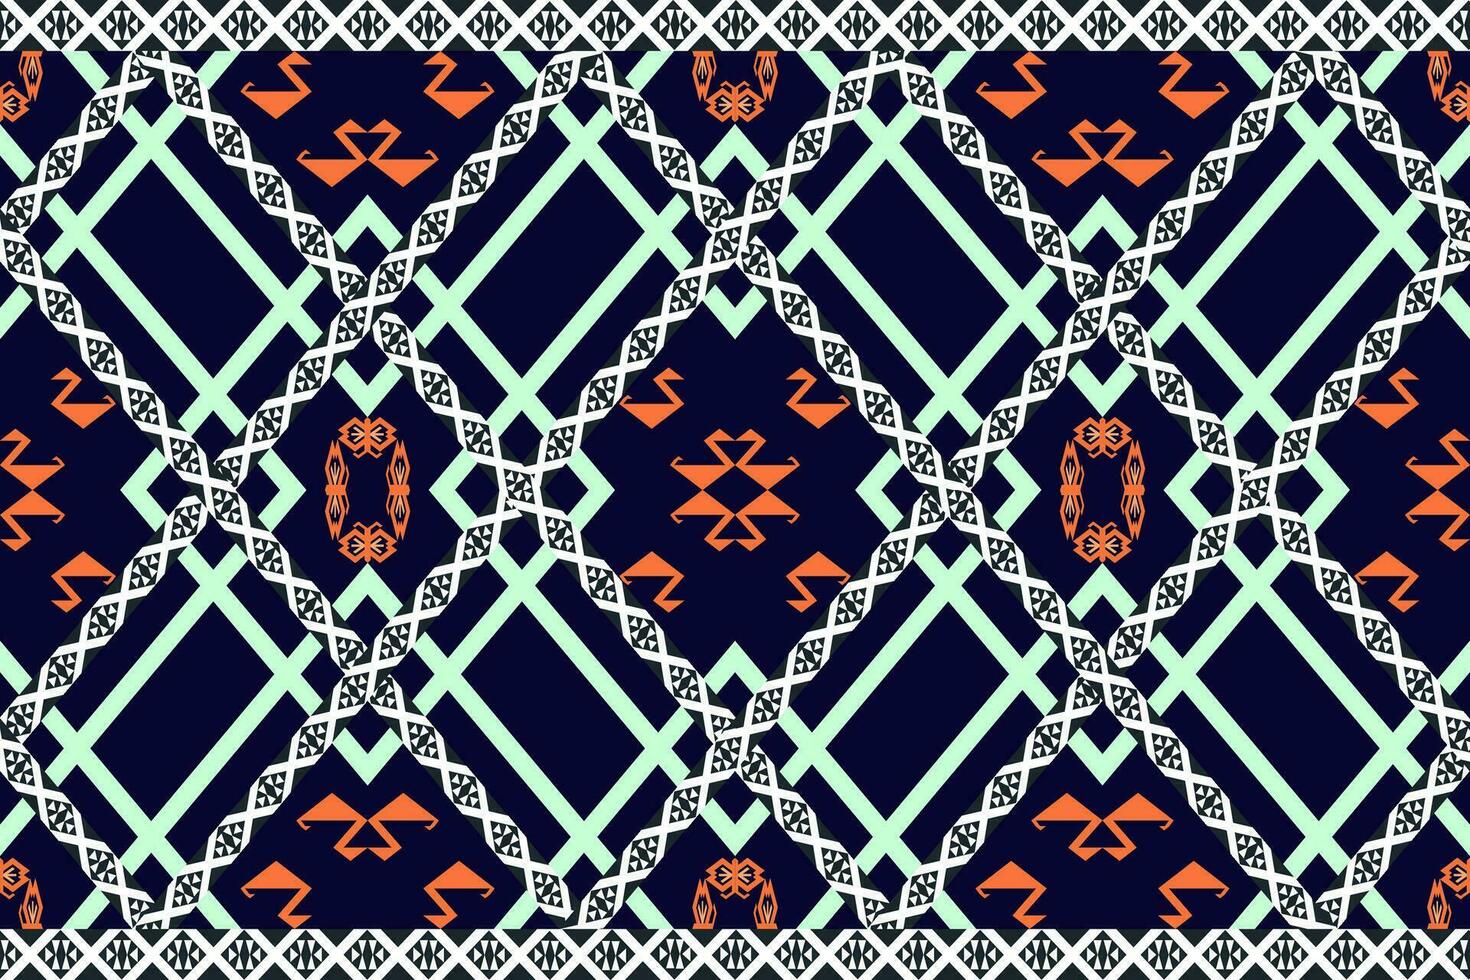 geometrisk patchwork etnisk mönster vektor för stam- boho design,tapet,omslag,mode,matta,kläder,stickat,batik,illustration.etnisk abstrakt ikat.